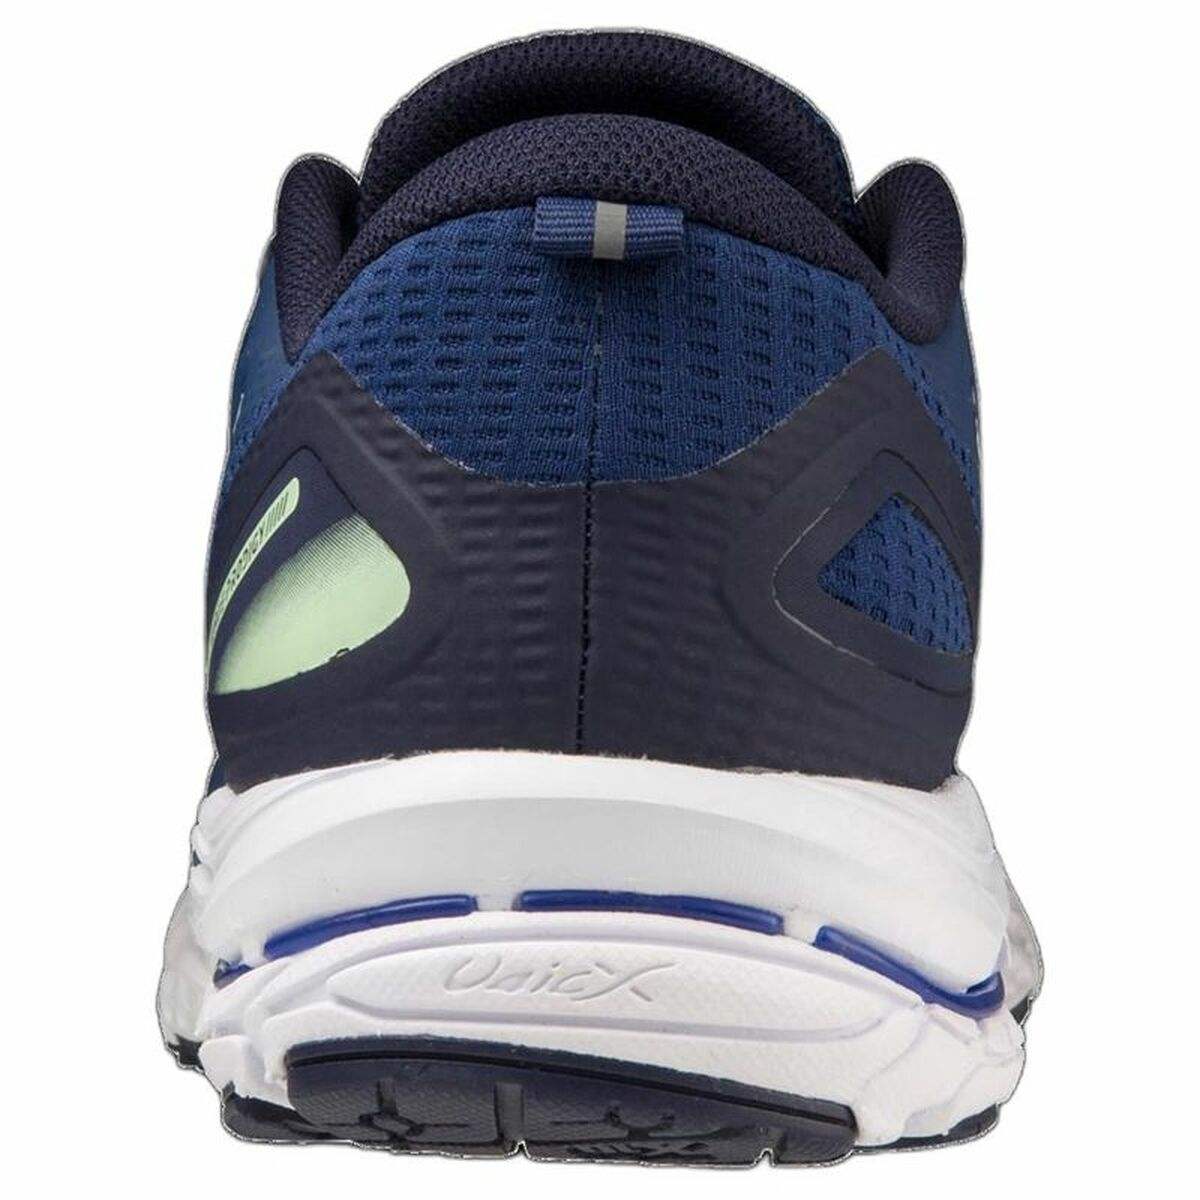 Chaussures de Running pour Adultes Mizuno Wave Prodigy 5 Bleu Homme - Mizuno - Jardin D'Eyden - jardindeyden.fr